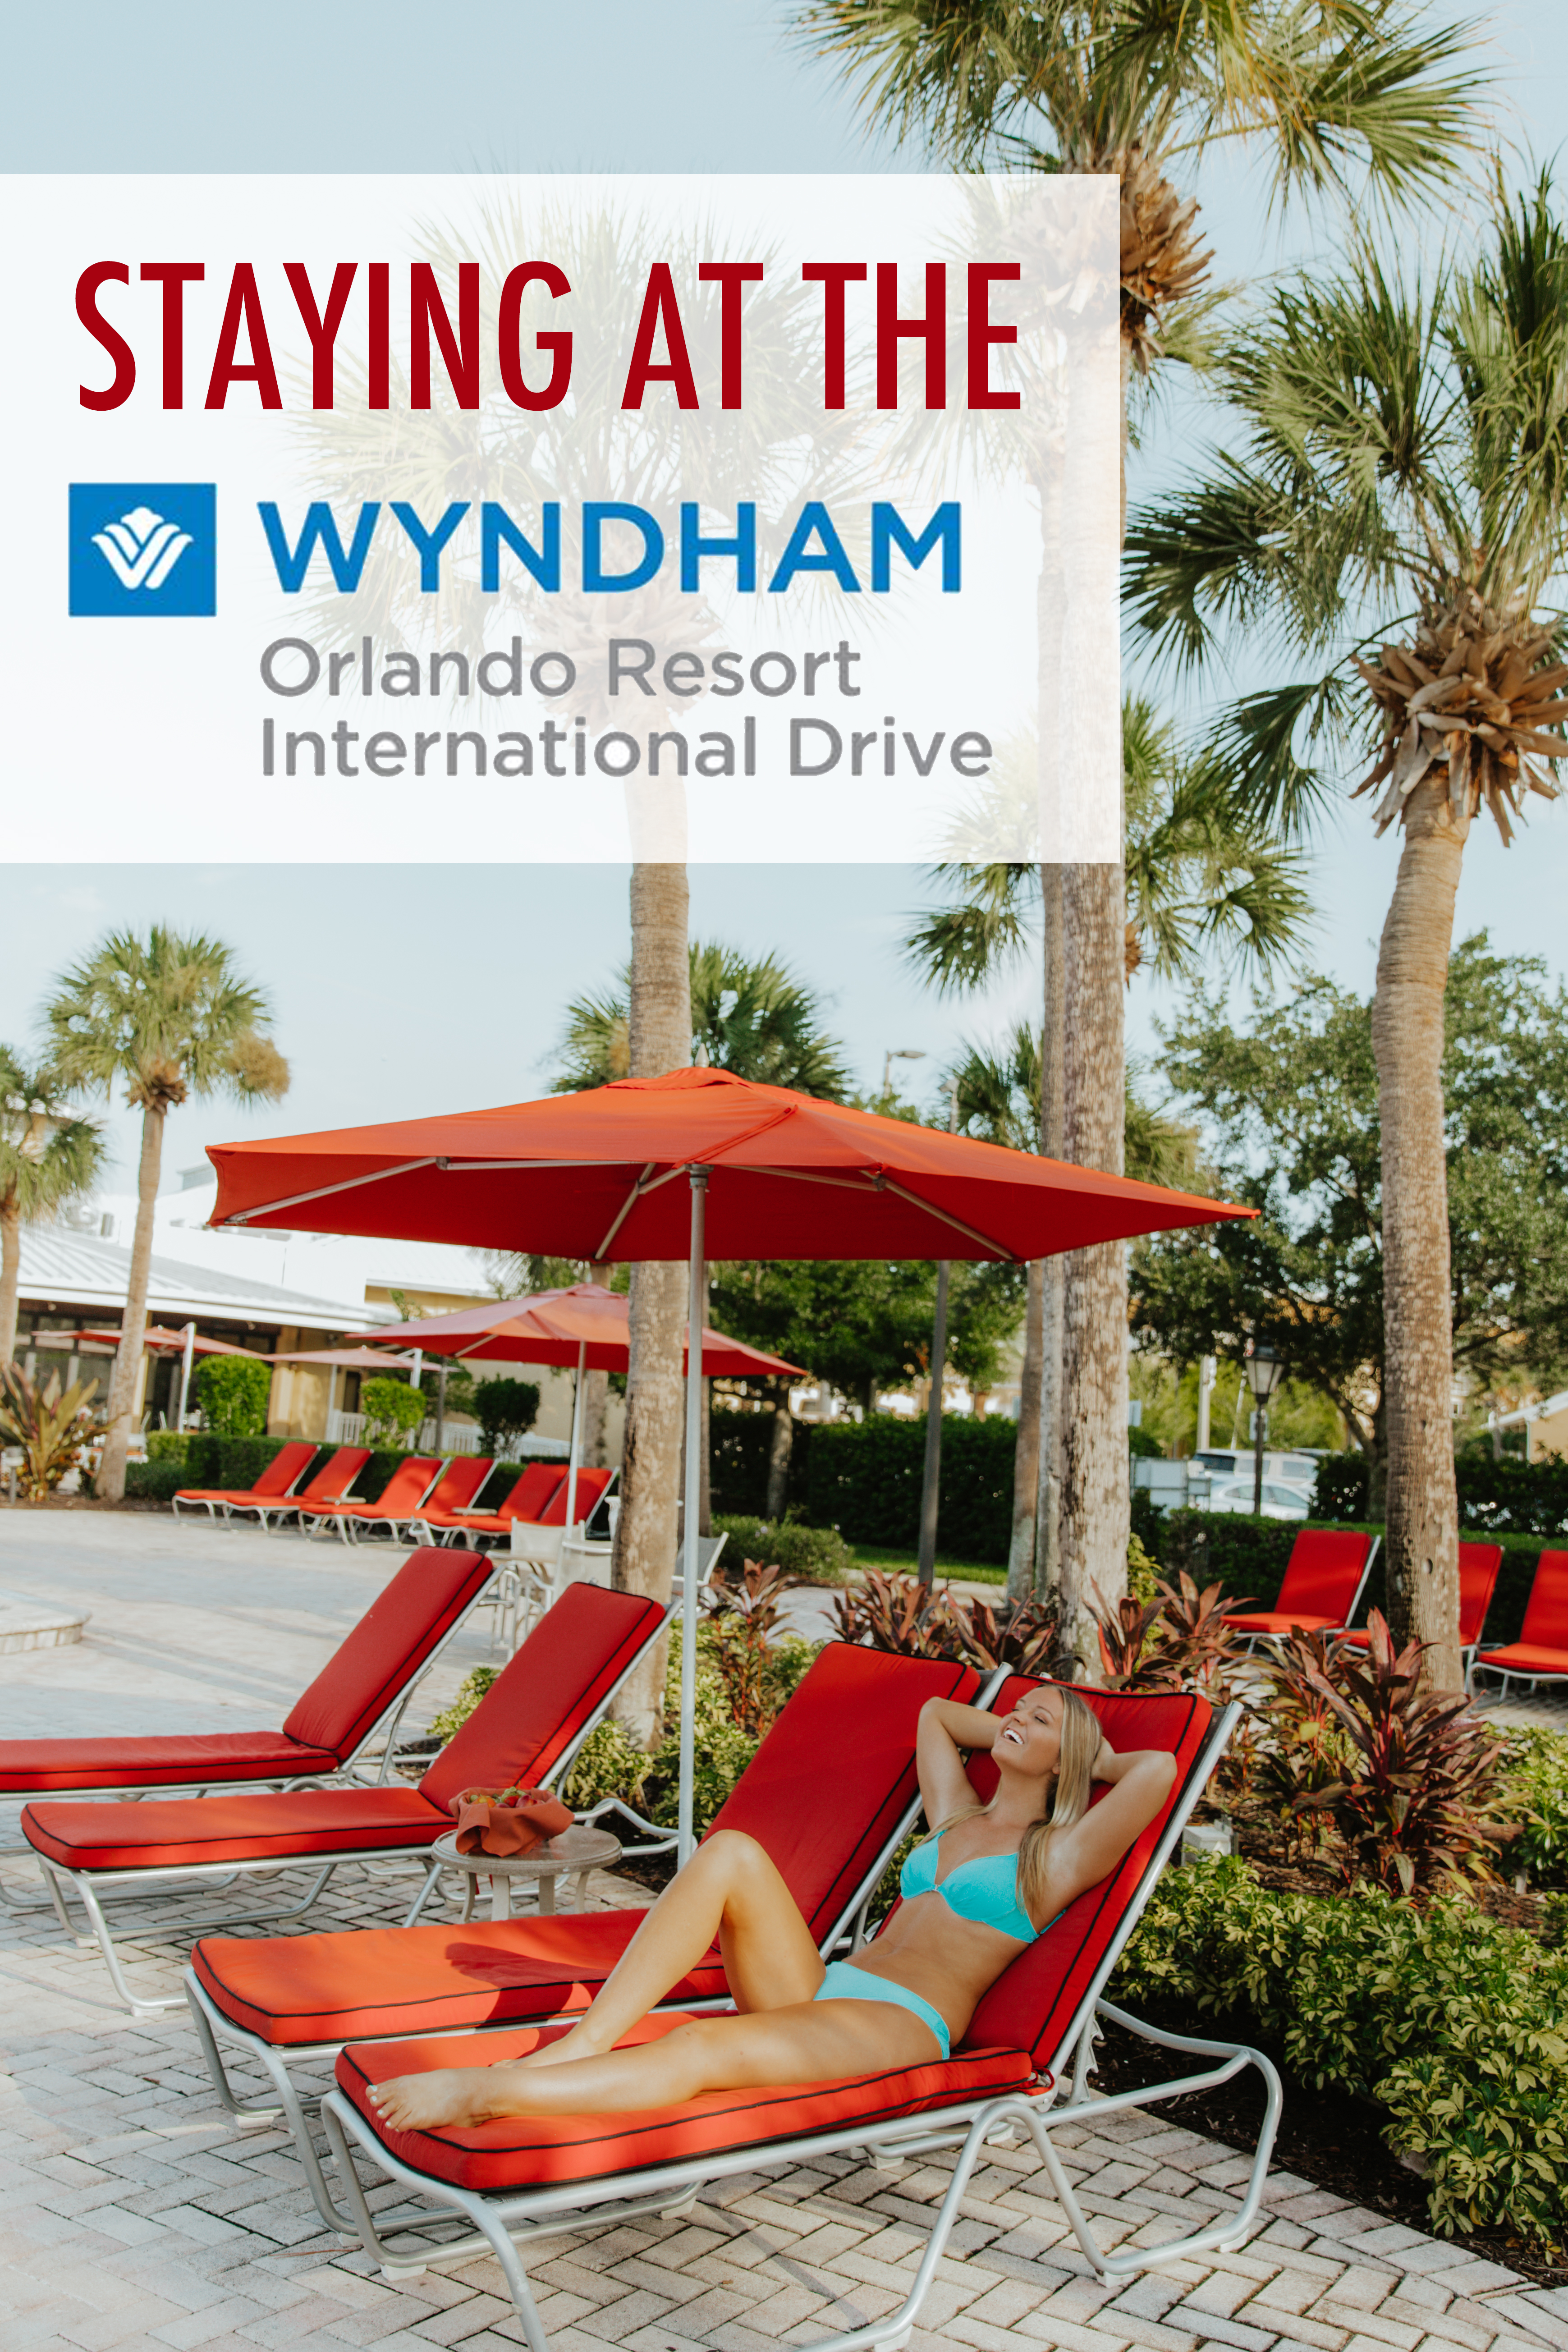 Staying at the Wyndham Orlando Resort International Drive